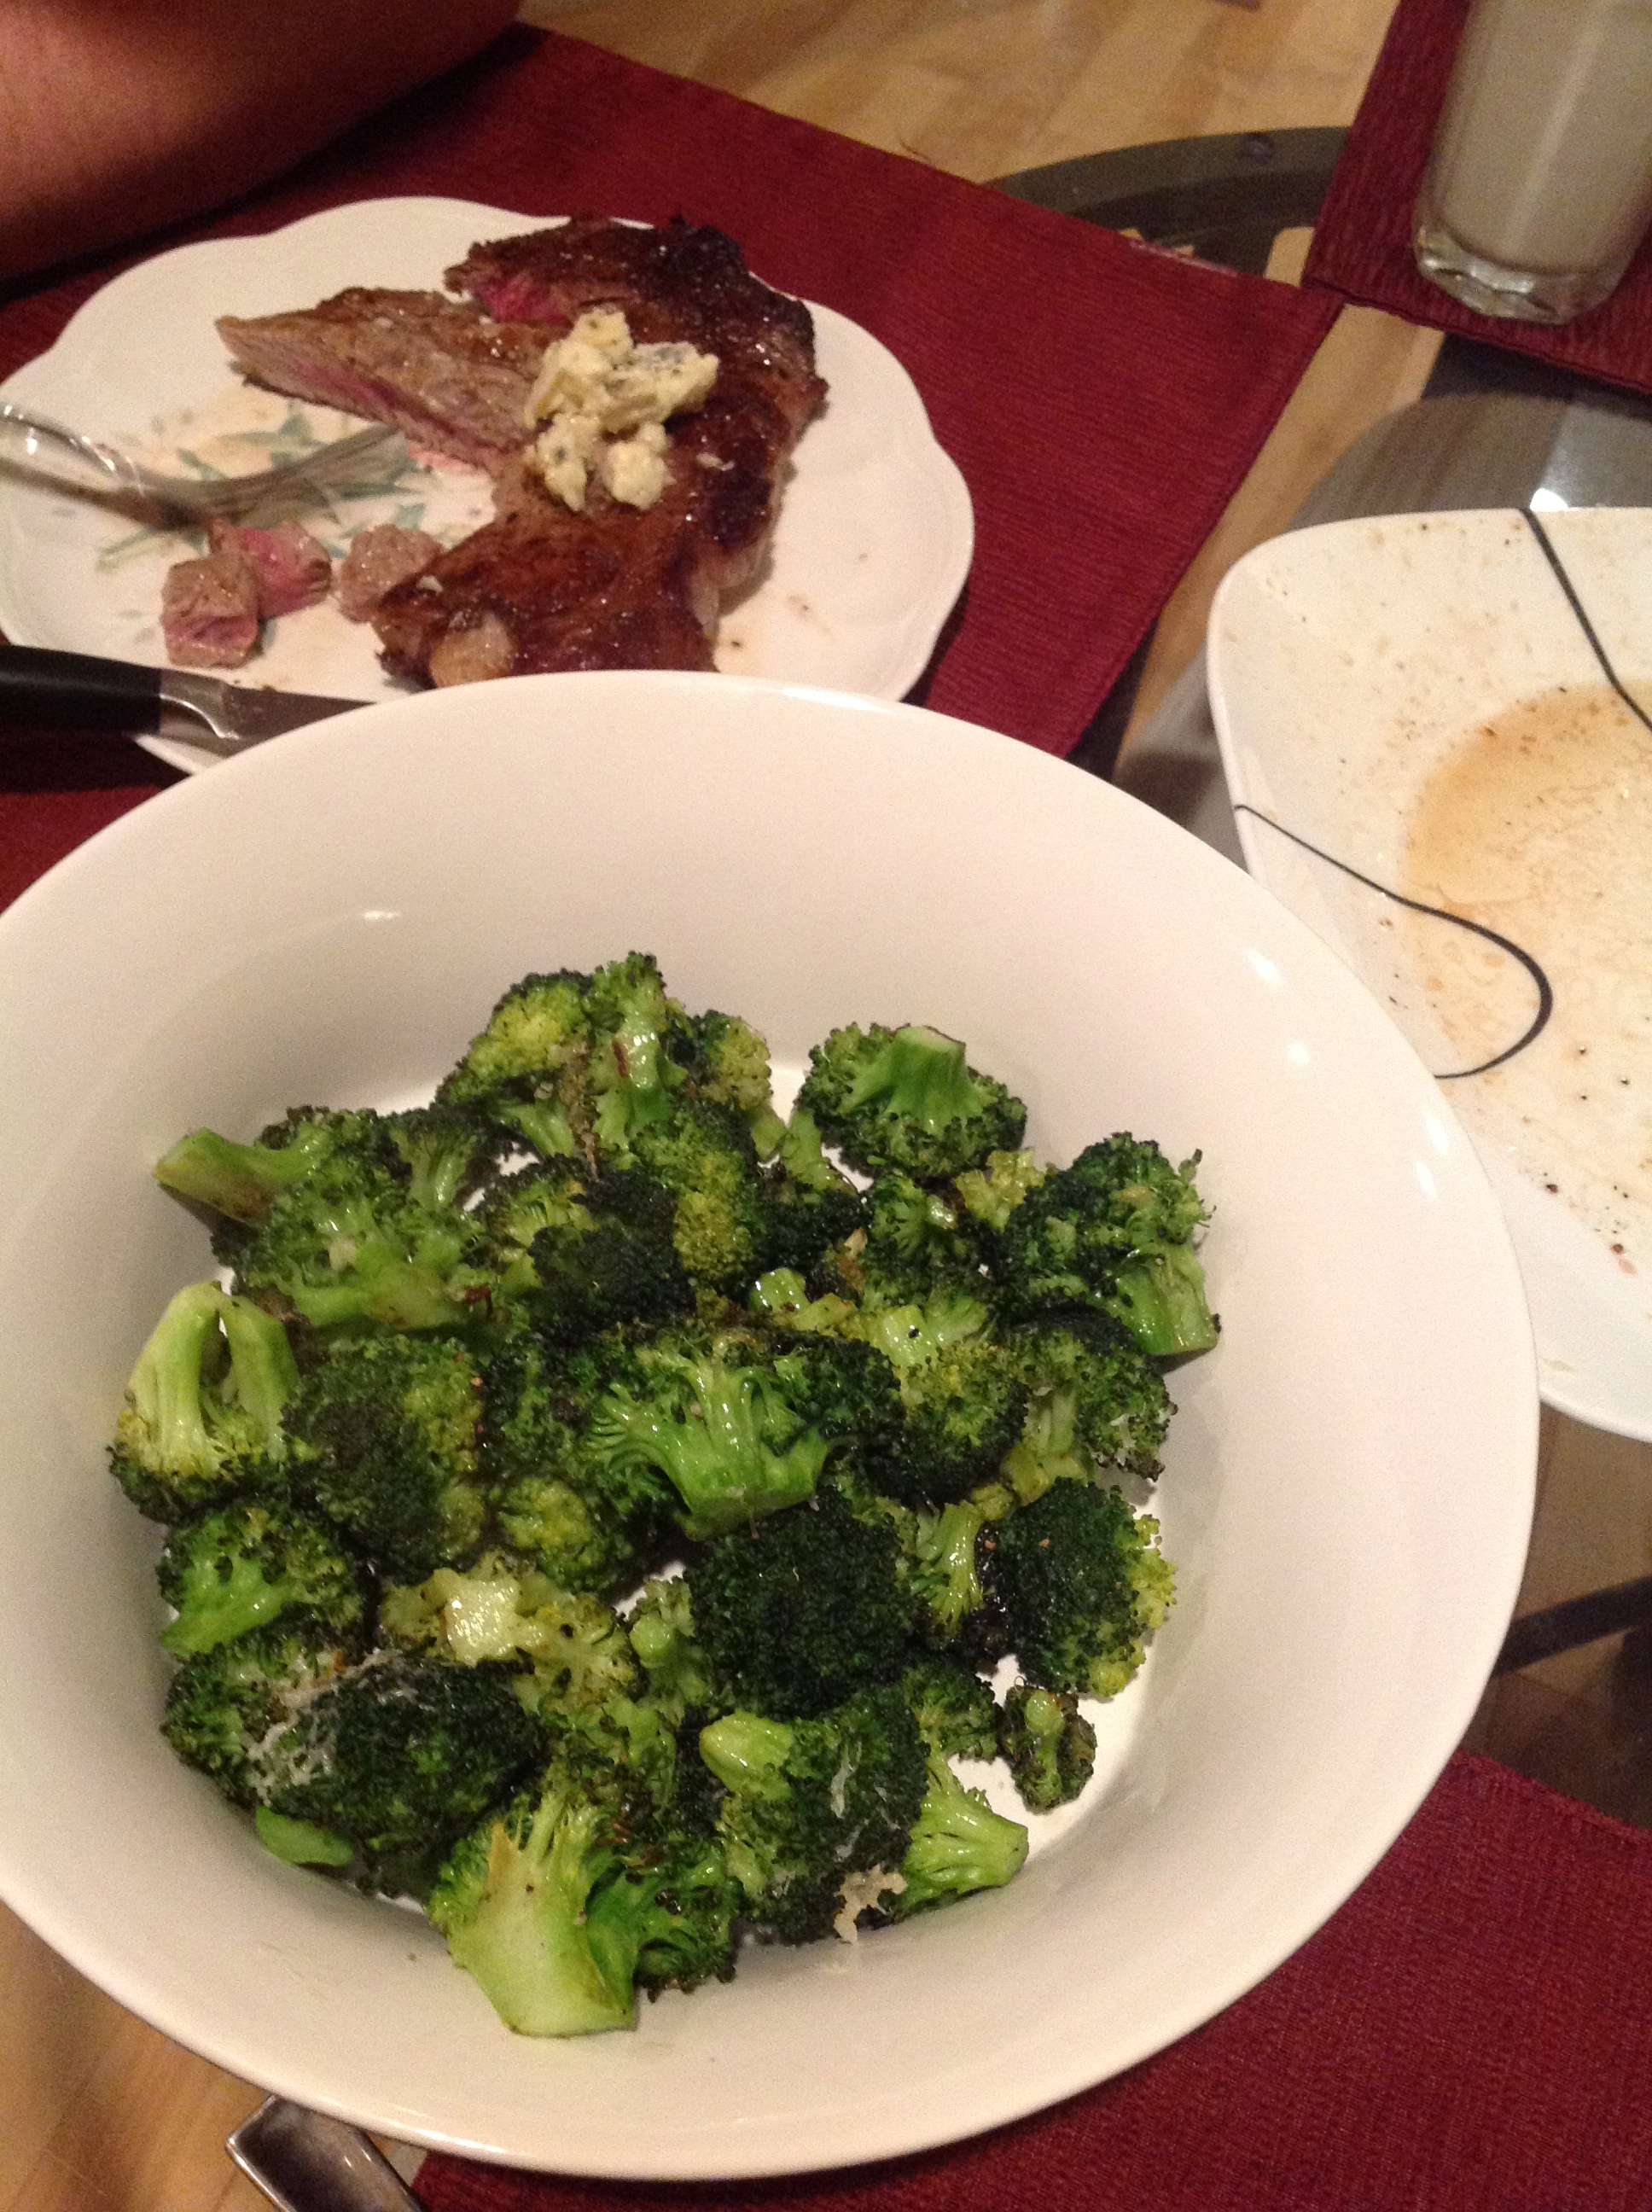 my fave lately,roasted broccoli (i splurged and bought organic)